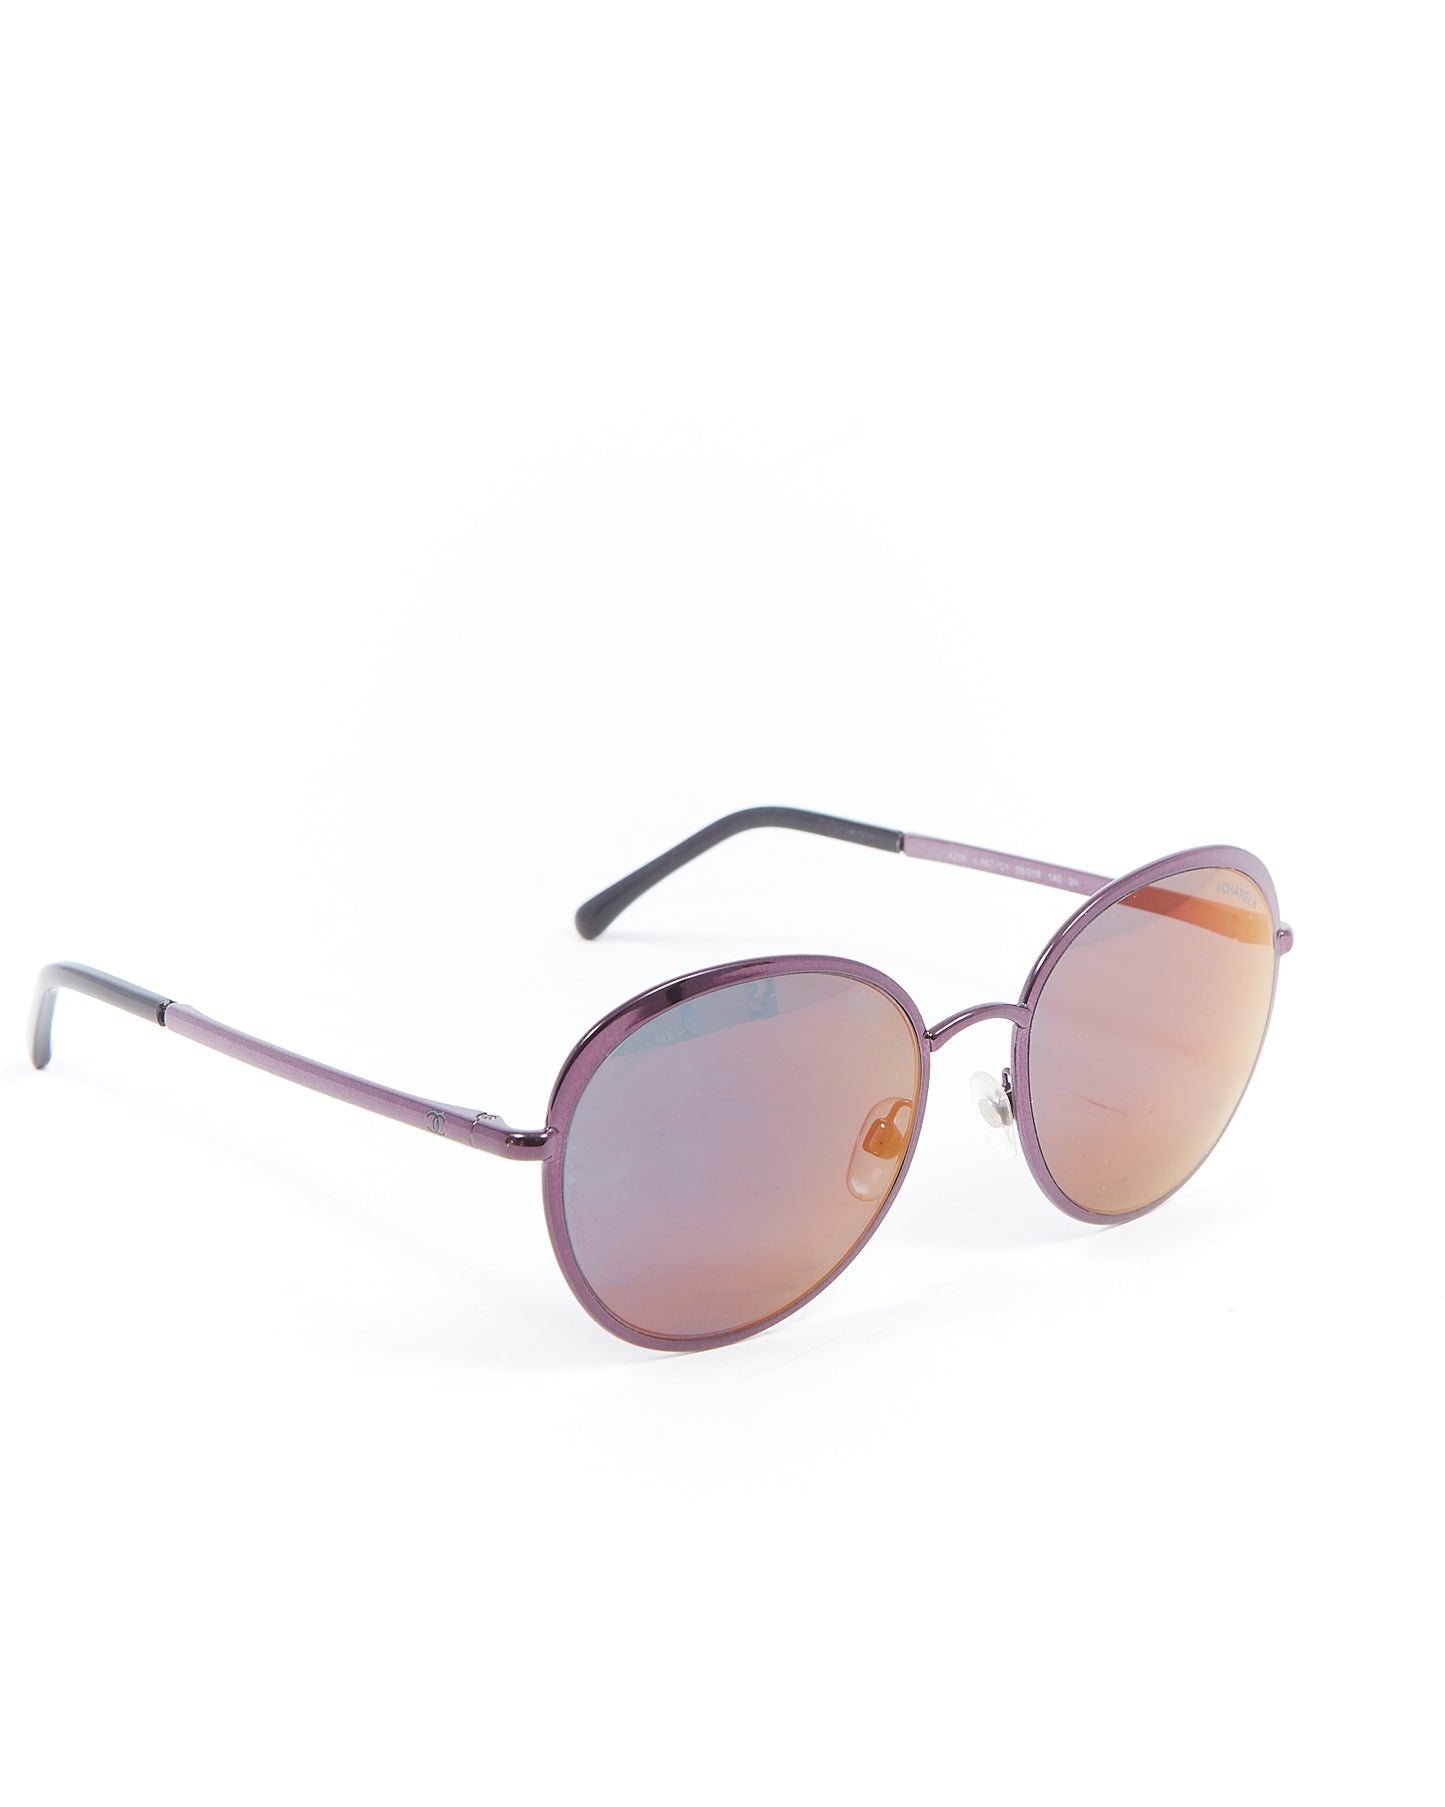 Chanel Purple Round 4206 Sunglasses